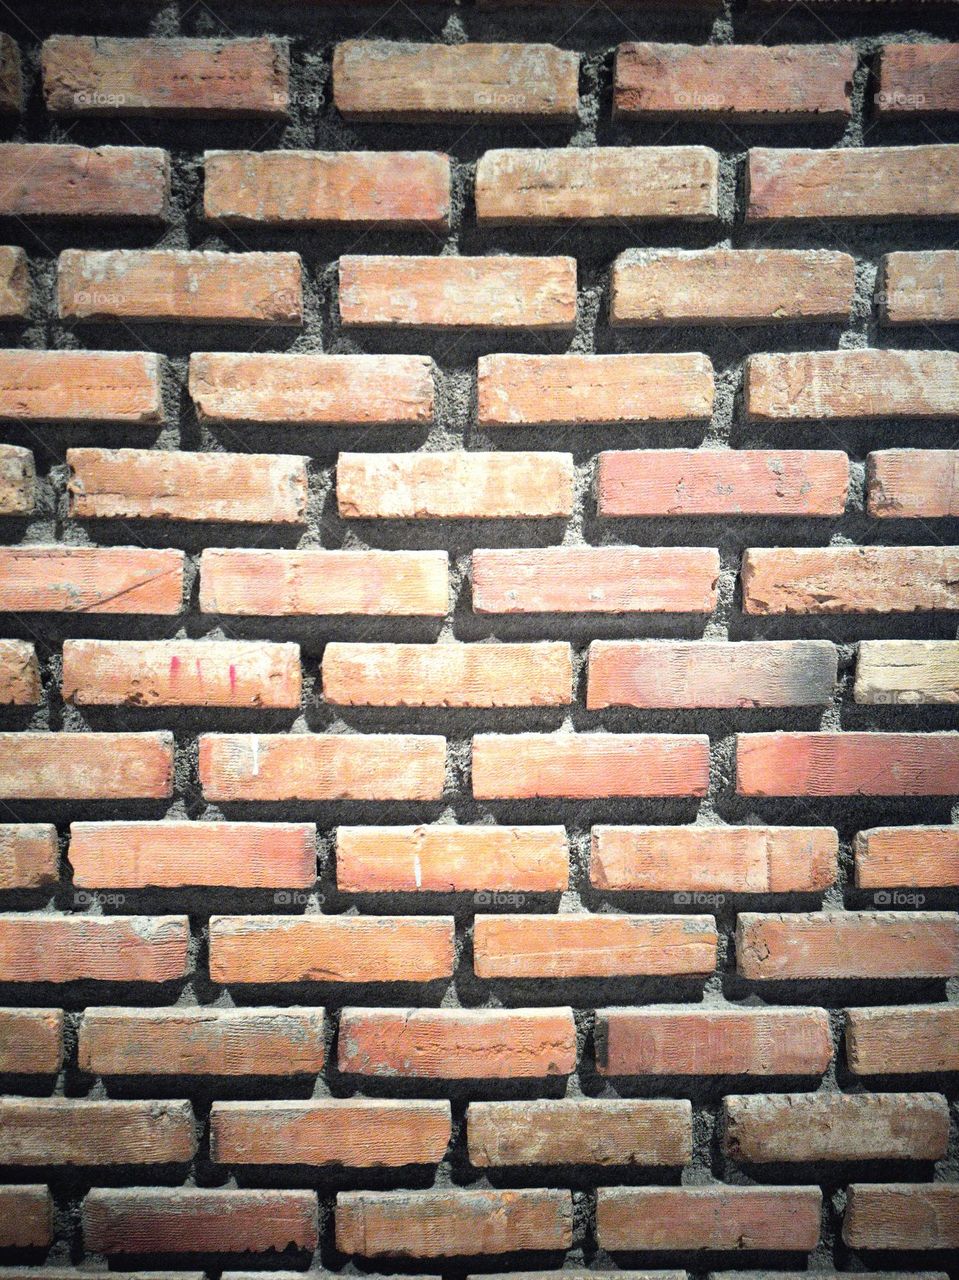 Textured Wall Surface with Orange Bricks